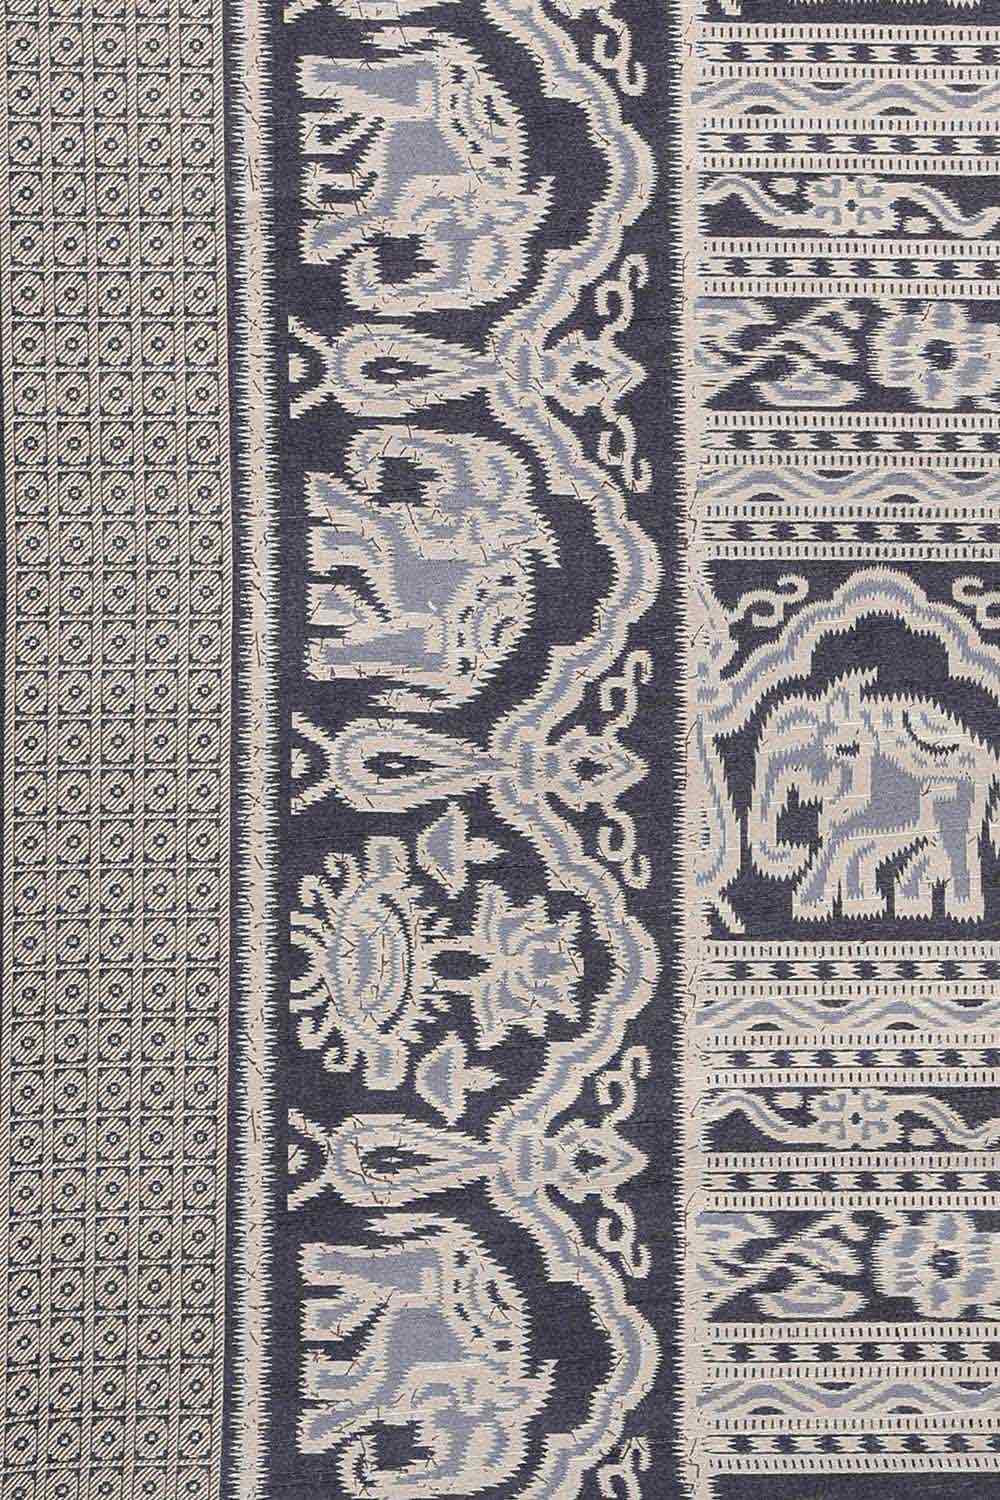 Navy Blue Bhagalpuri Silk Printed Saree